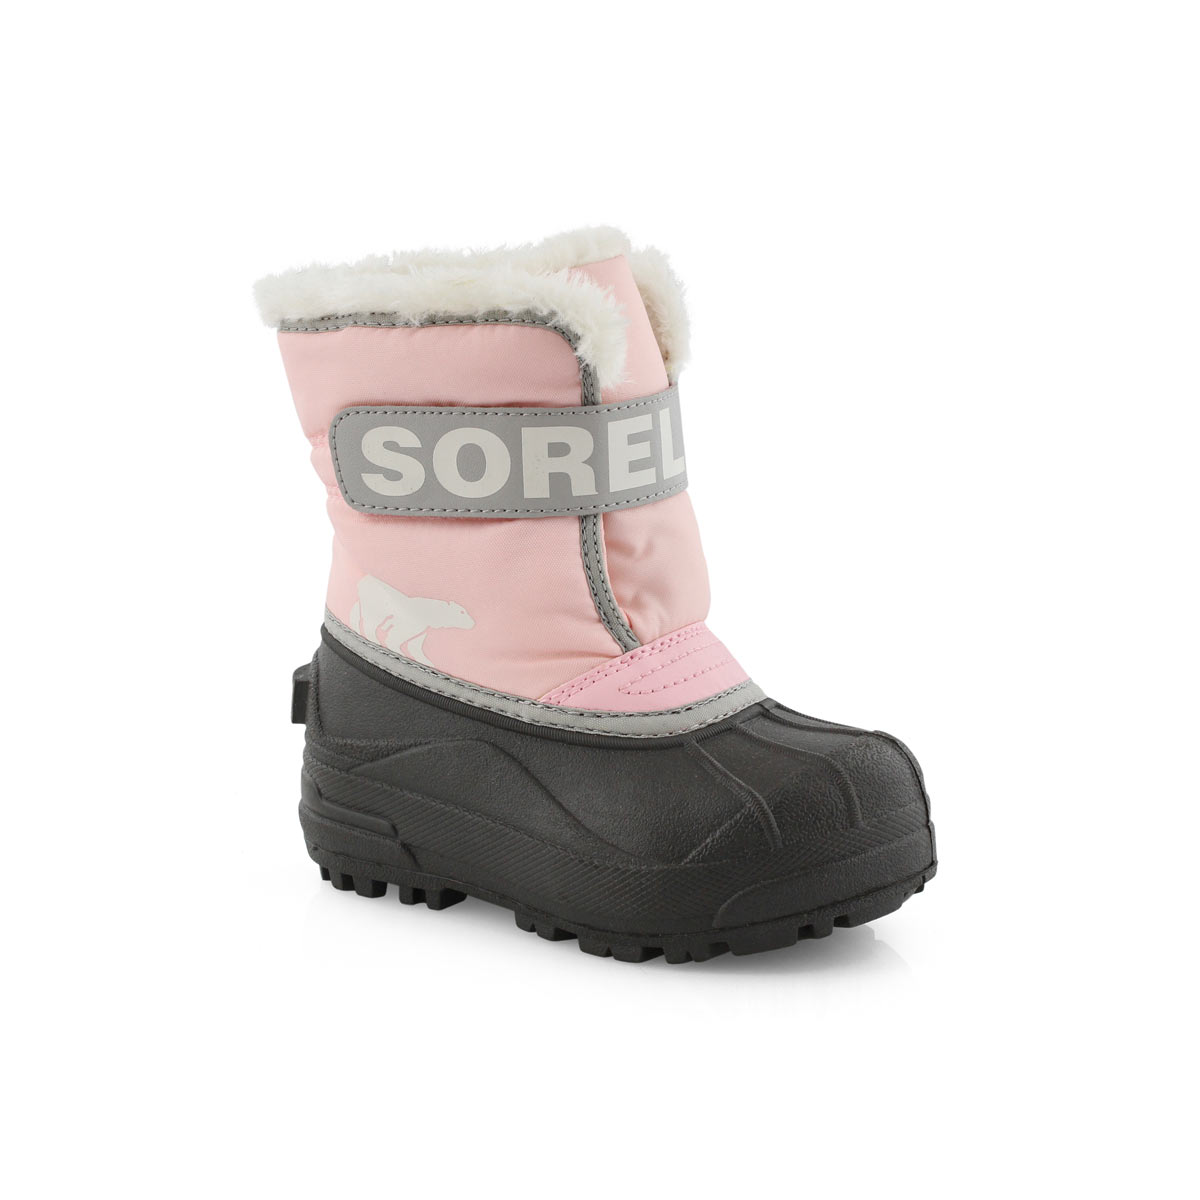 softmoc sorel boots